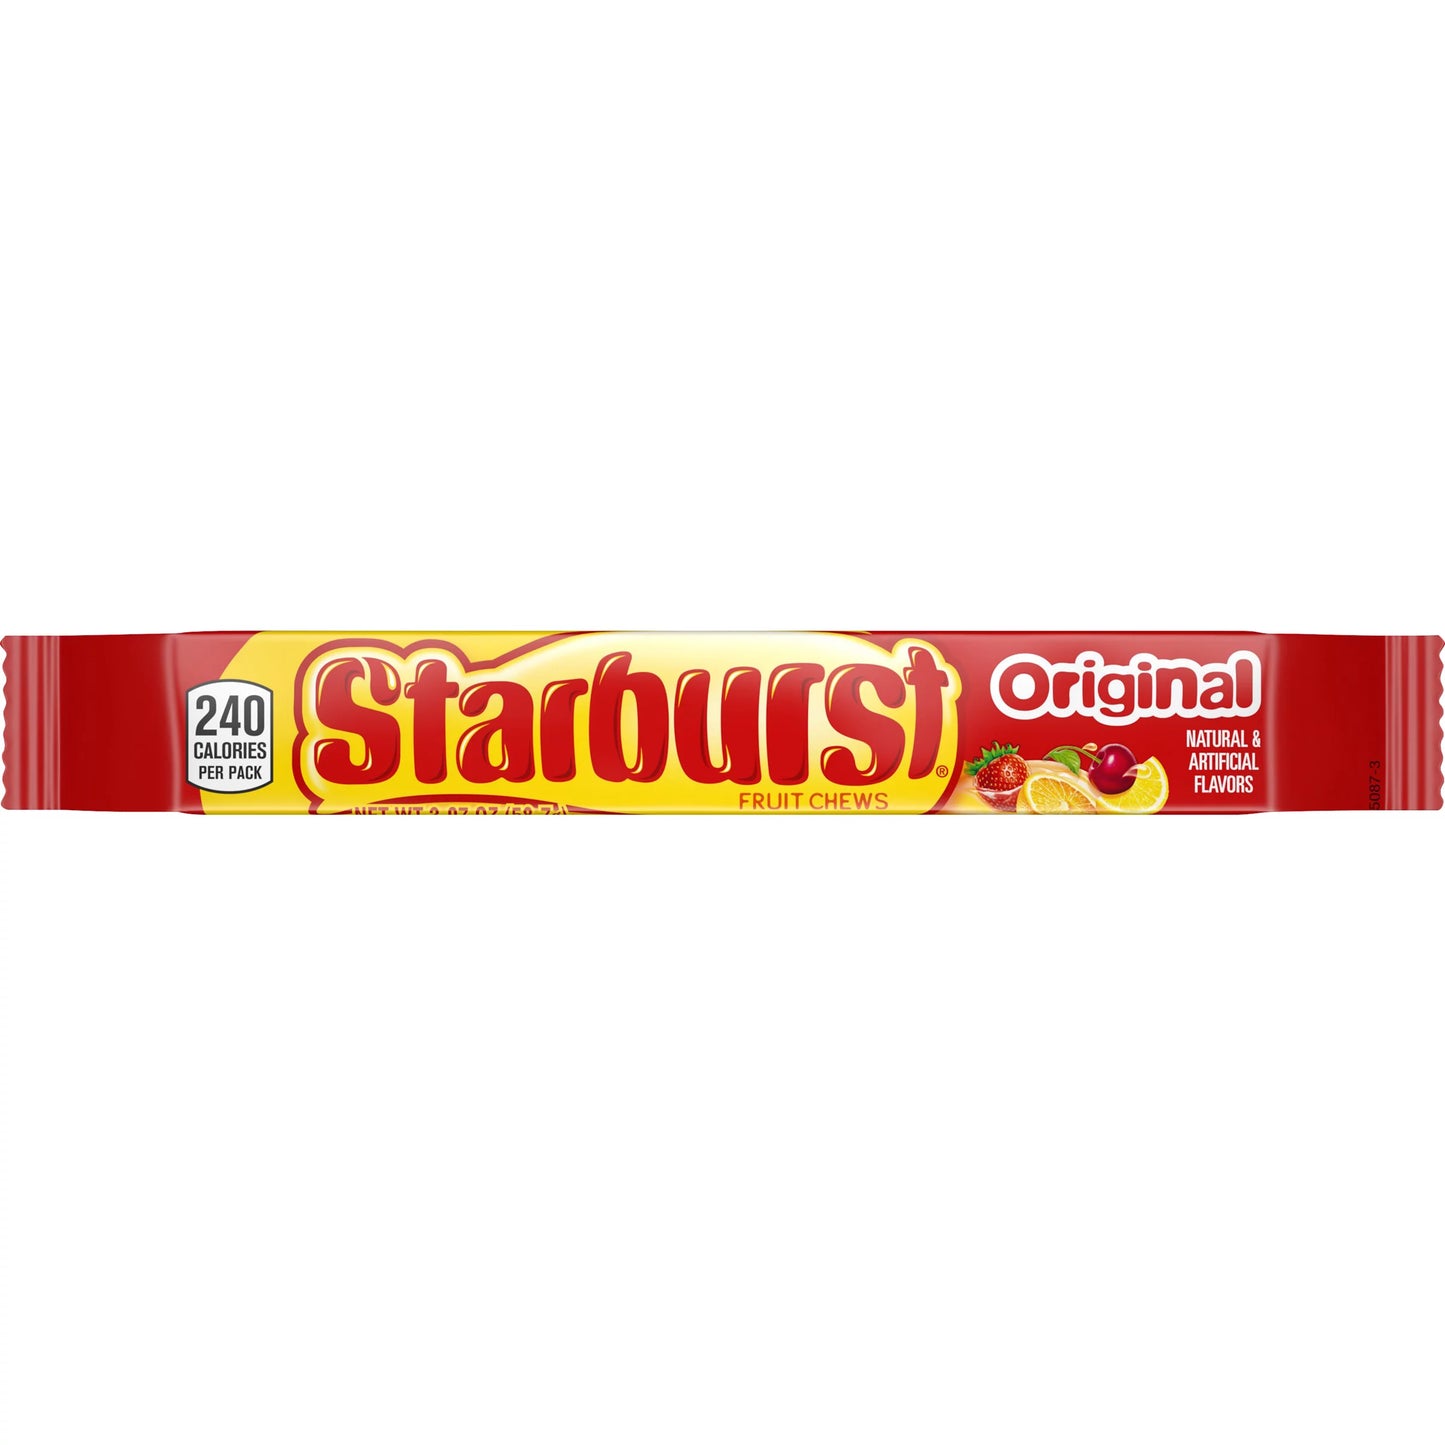 Starburst Original Fruit Chews Candy Single Pack, 2.07 oz.